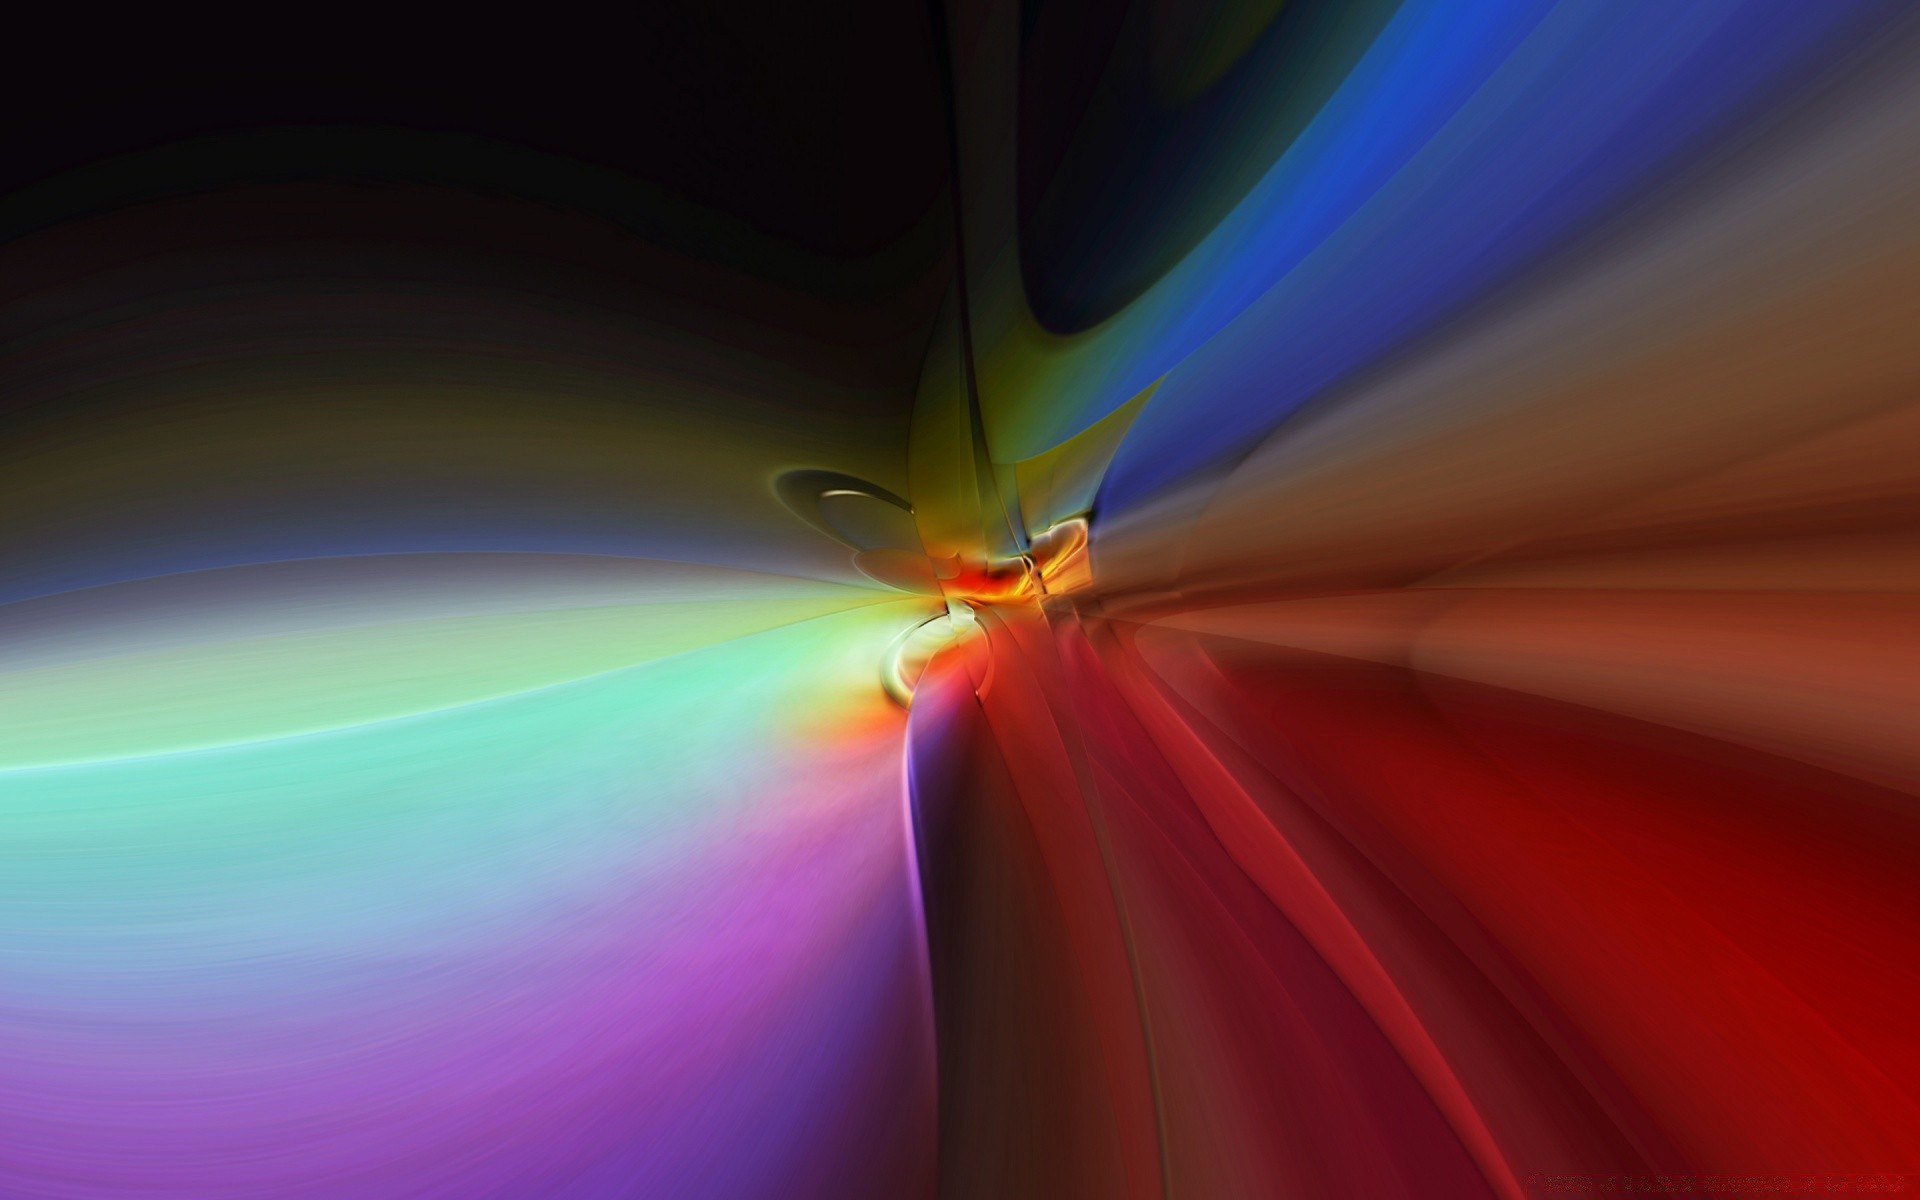 abstract blur art motion creativity surreal bright color light futuristic zoom artistic